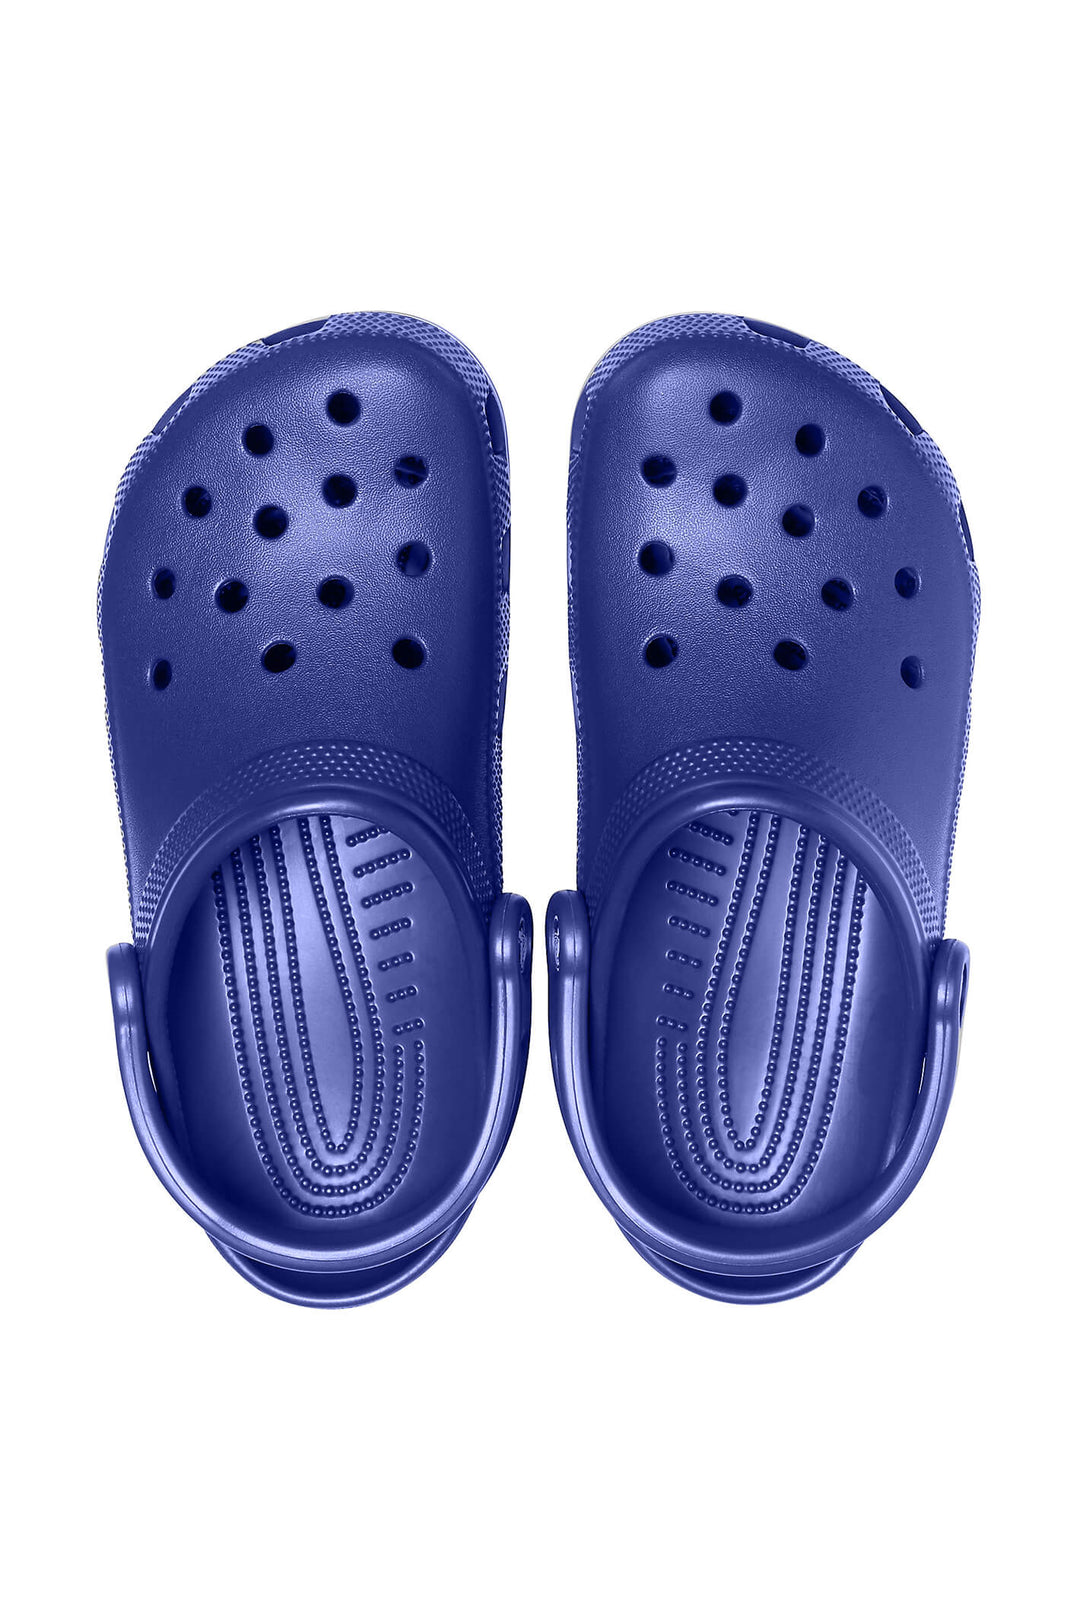 Crocs Classic Roomy Fit 10001 Cerulean Blue Clog